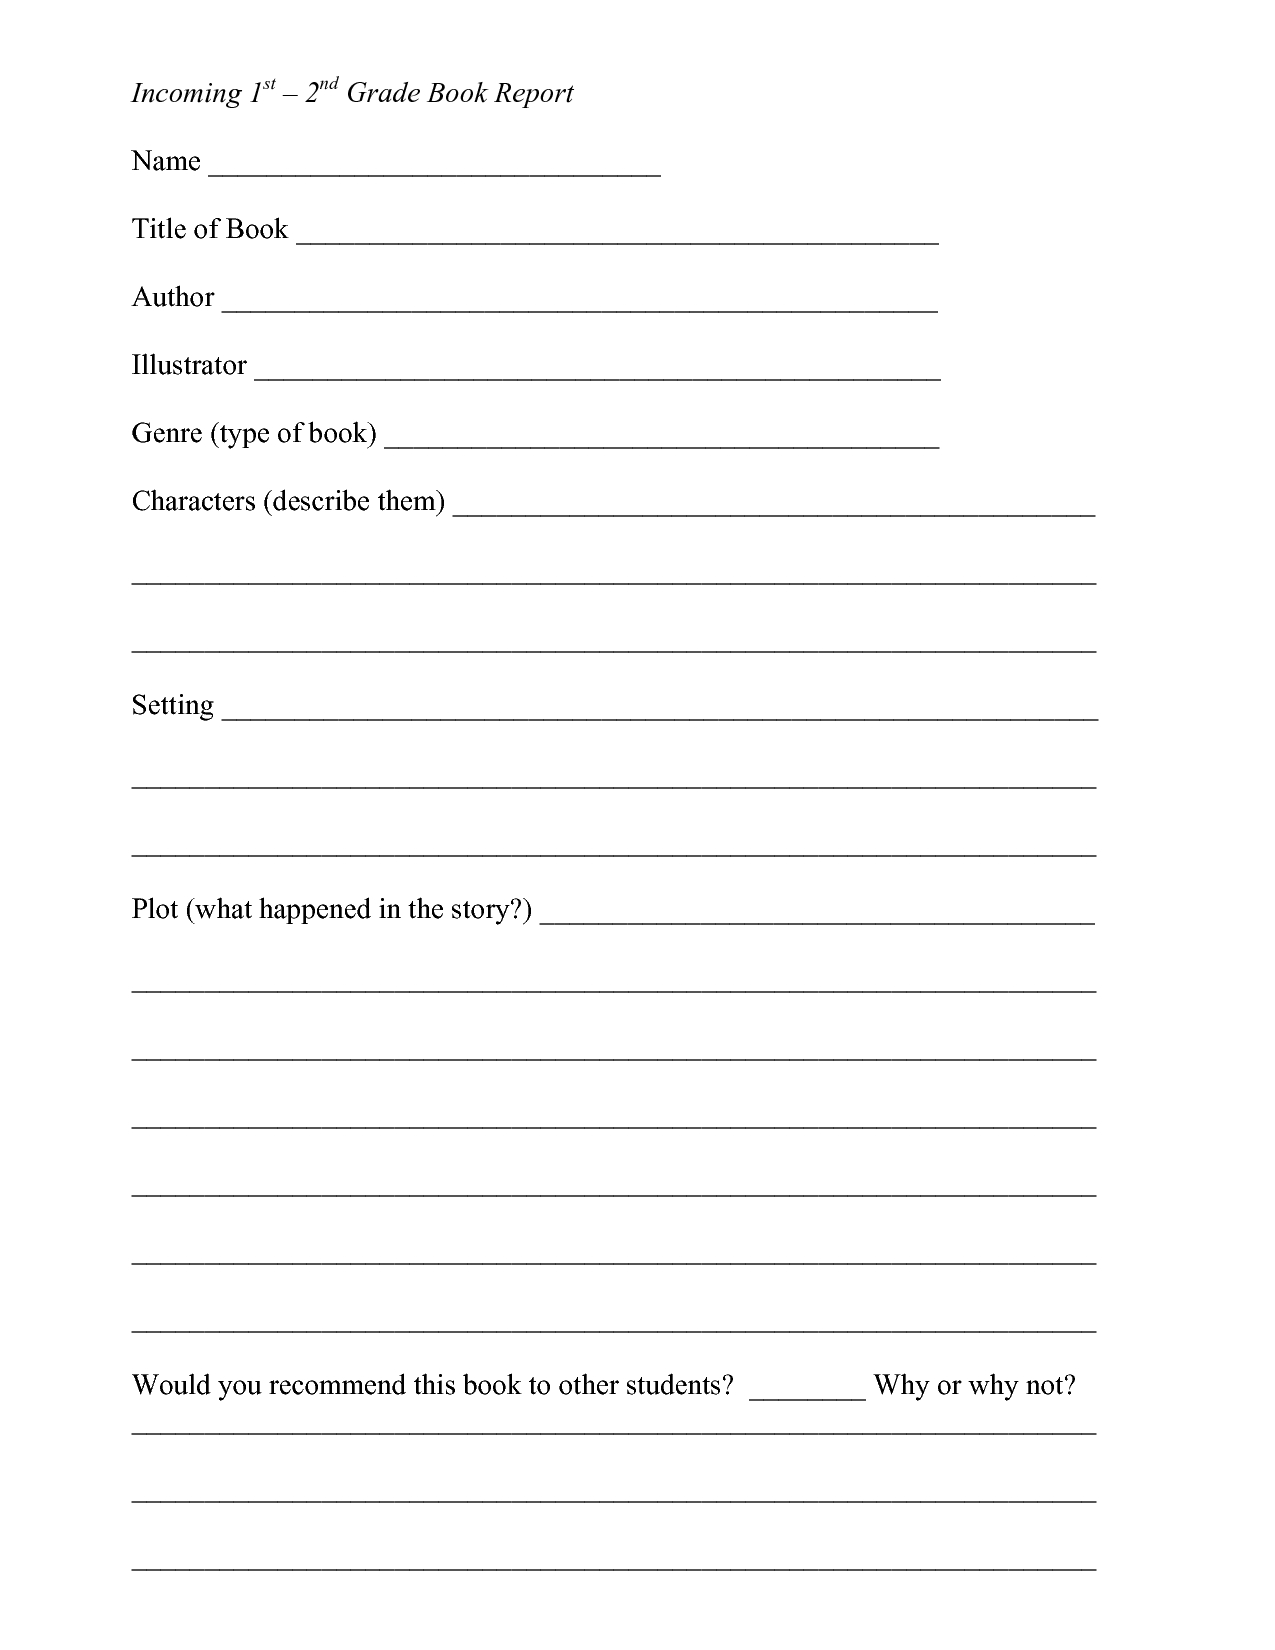 Book Report Template 2Nd Grade Free – Book Report Form Intended For Book Report Template 2Nd Grade